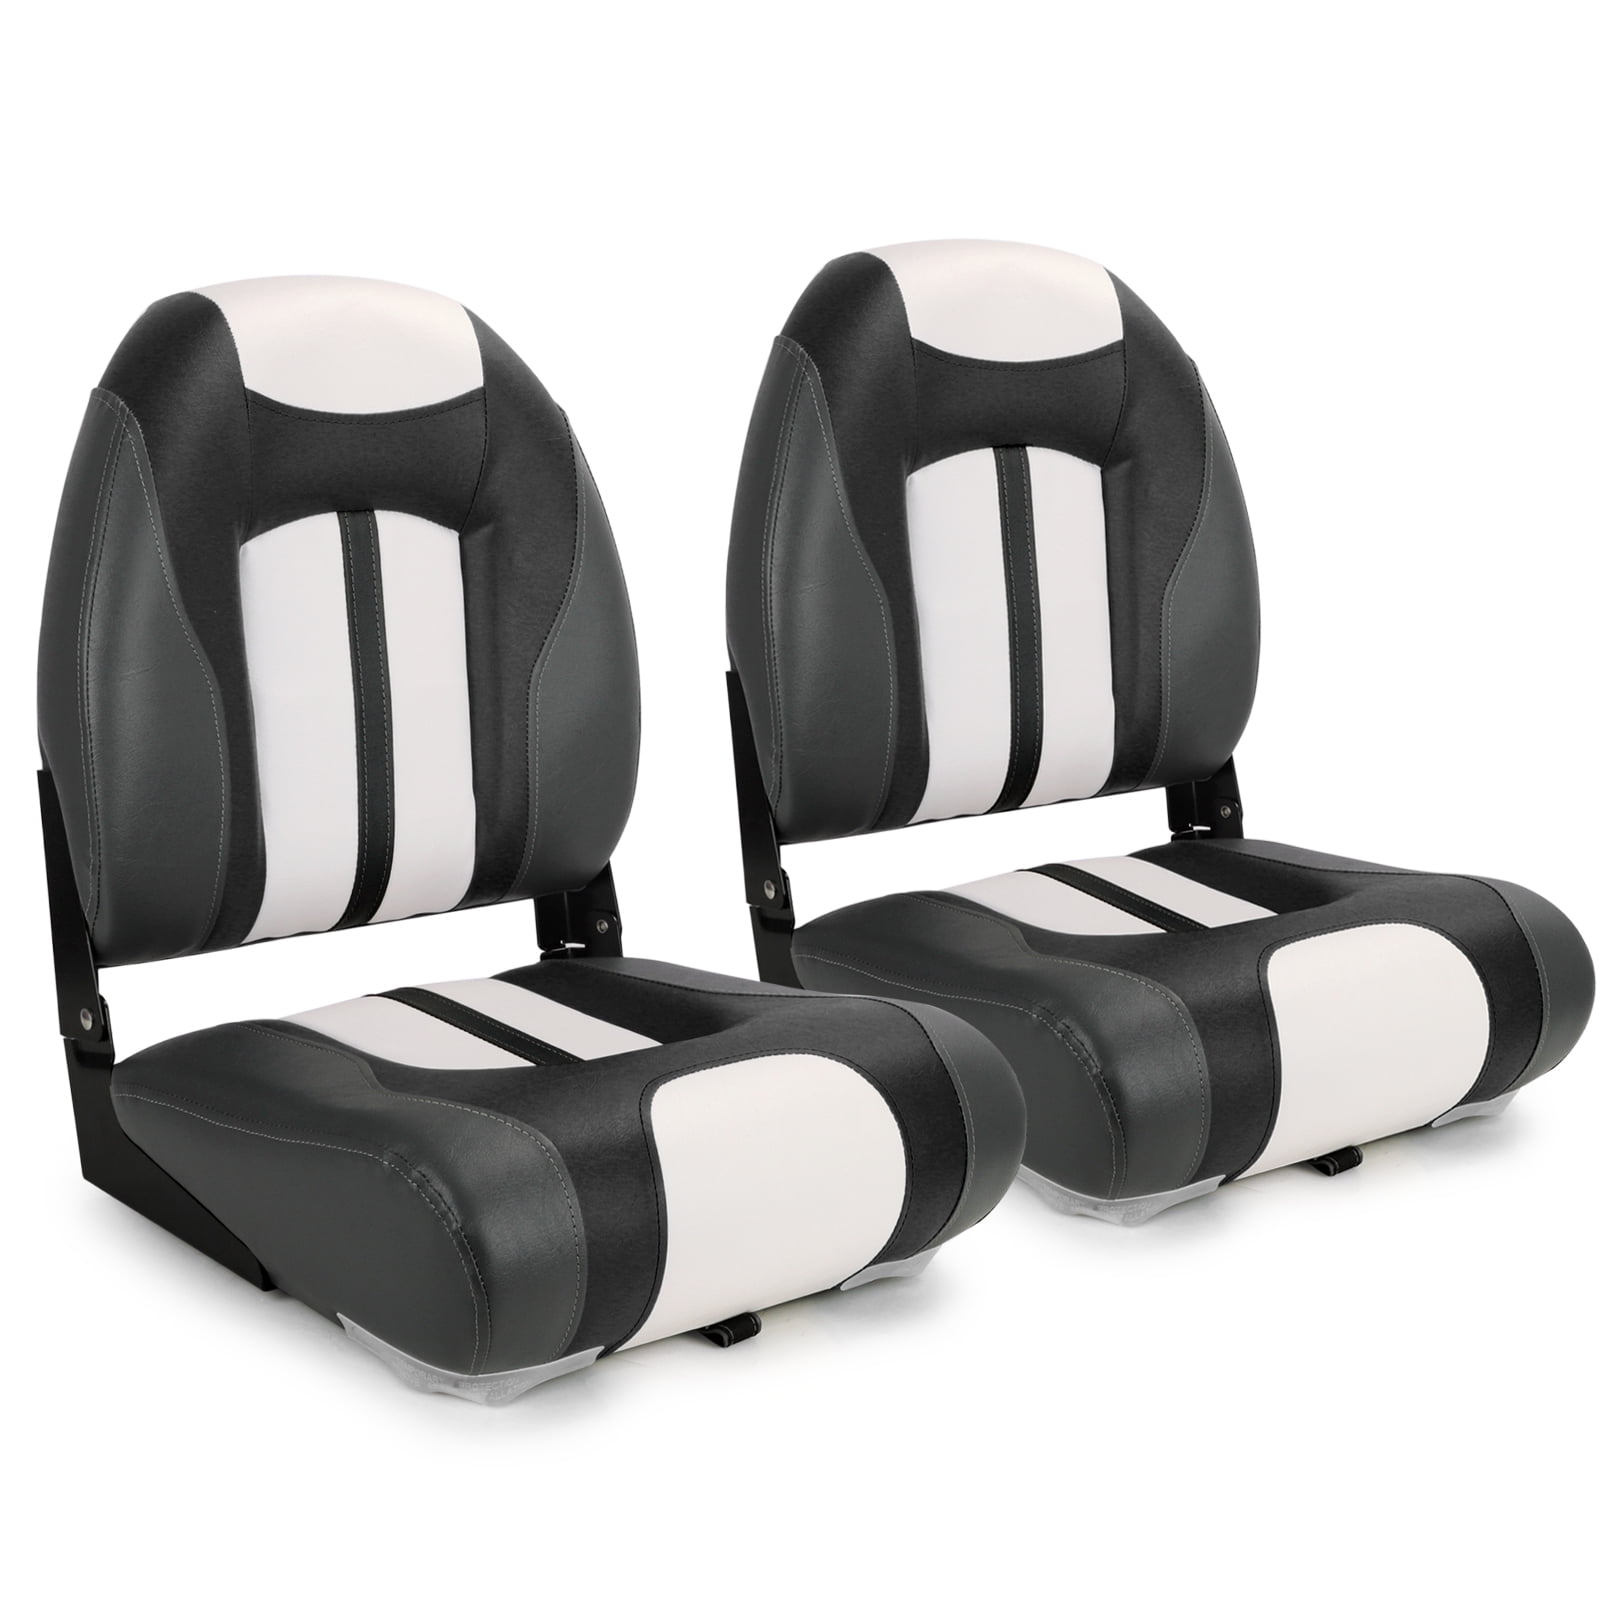 NORTHCAPTAIN S1 Deluxe High Back Folding Boat Seat,White/Black 